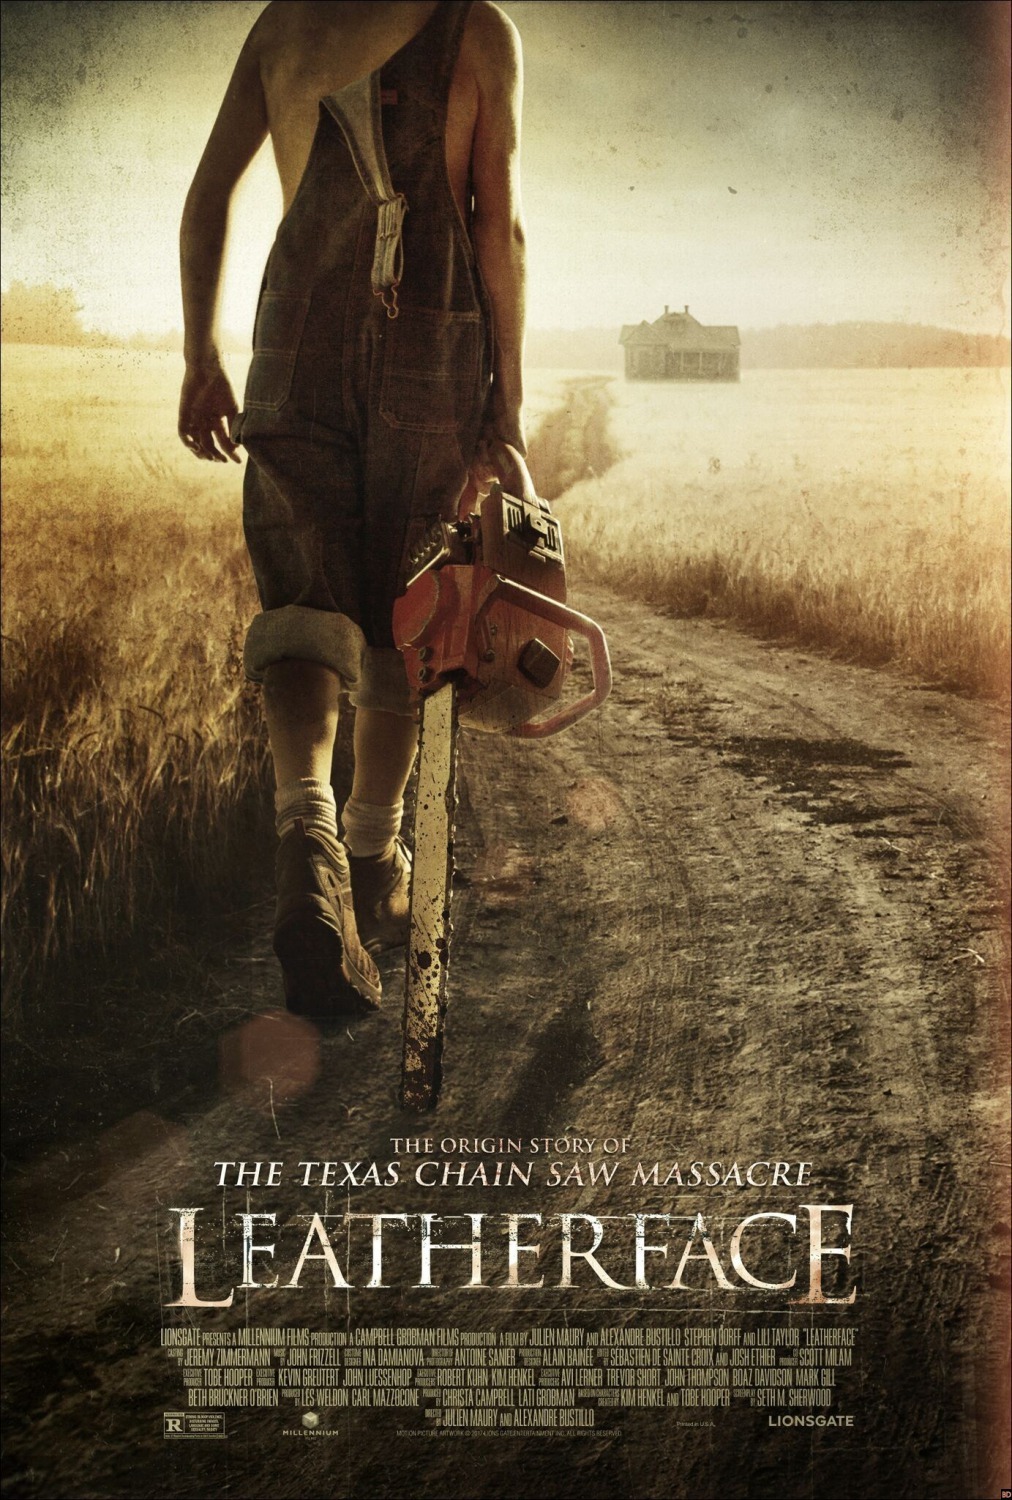 Nonton film Leatherface layarkaca21 indoxx1 ganool online streaming terbaru